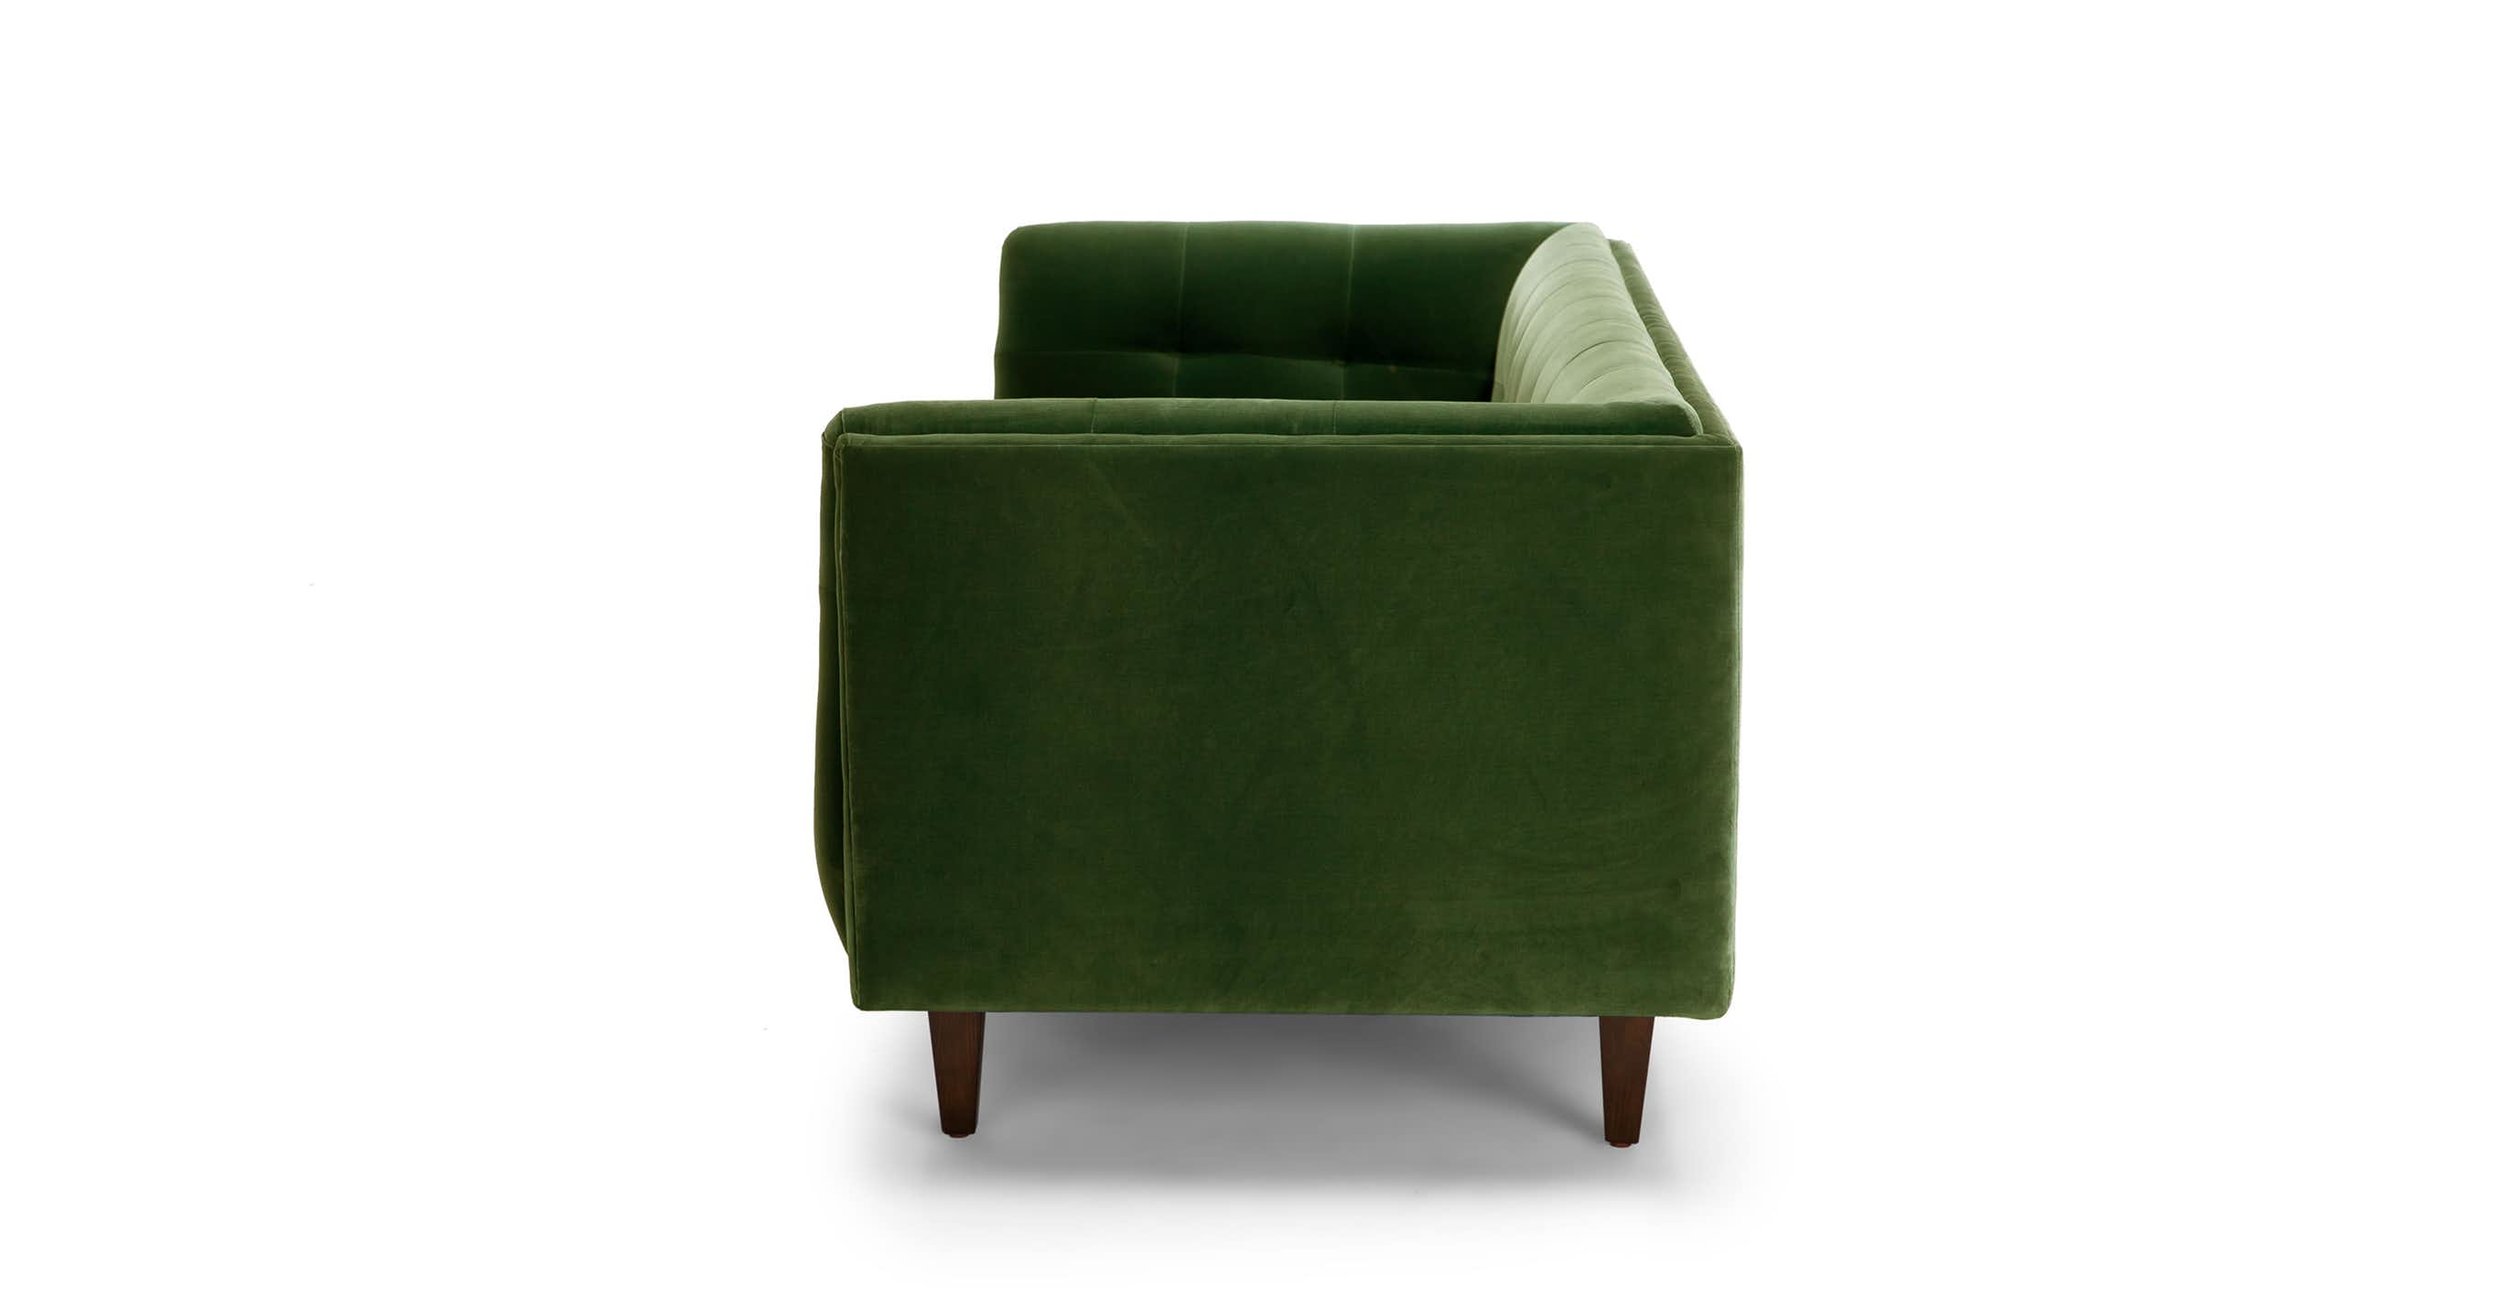 Cirrus Grass Green Sofa $1,000